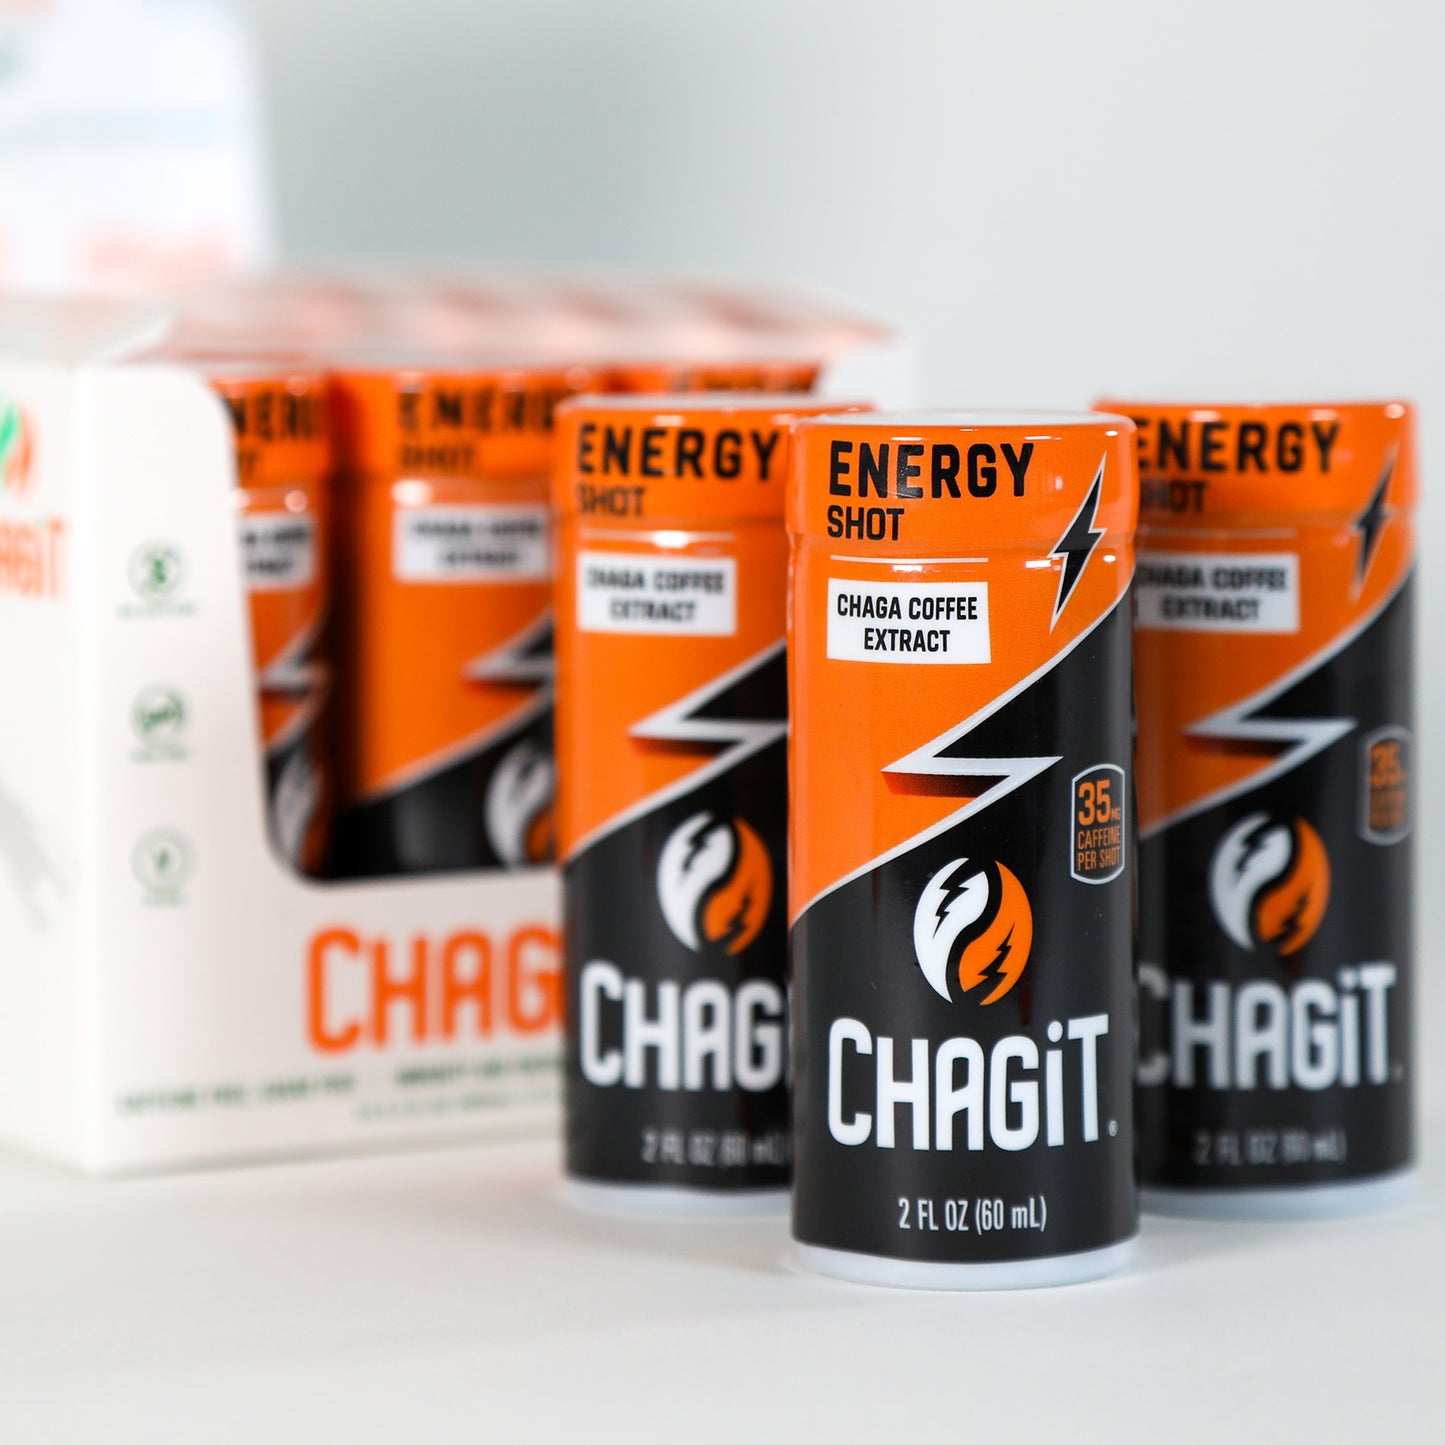 Energy Shot - Box of 15 - chagit360